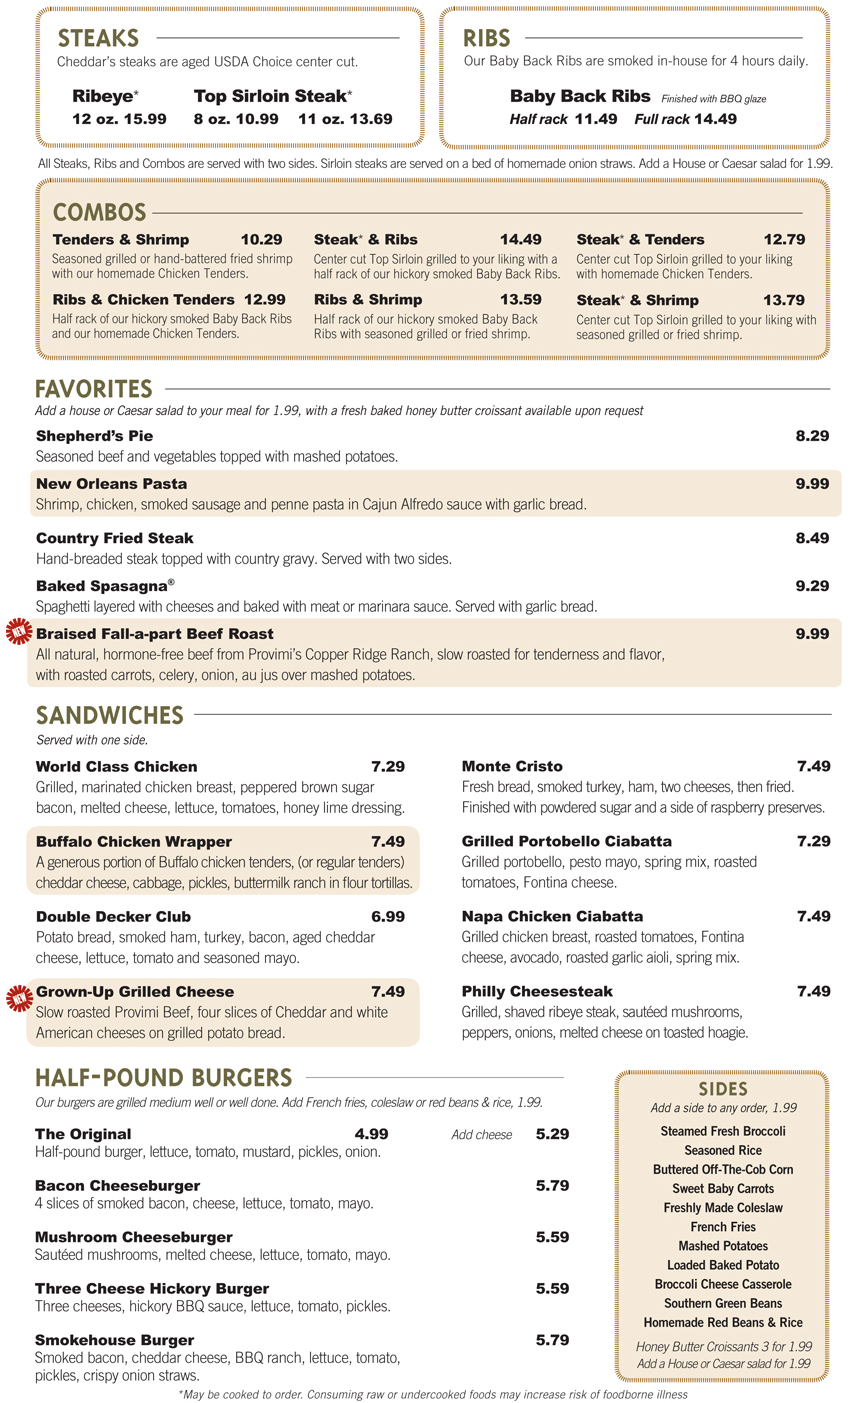 cheddars menu prices